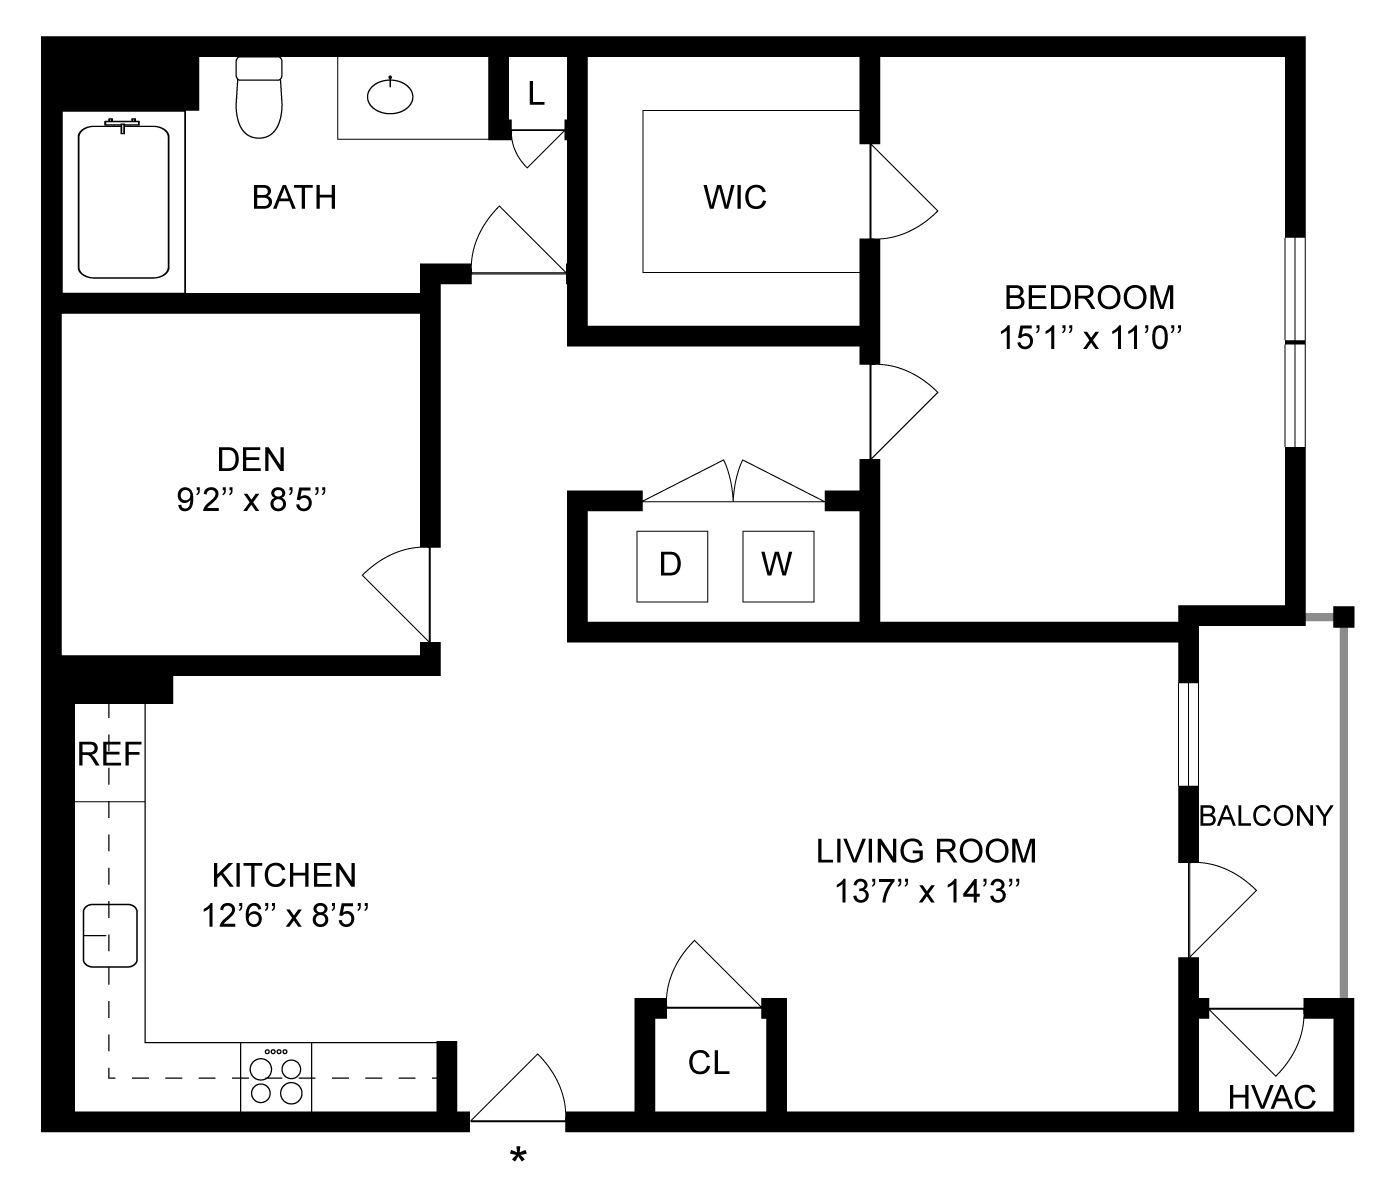 Floorplan for Apartment #01-C21, 3 bedroom unit at Halstead Hopkinton